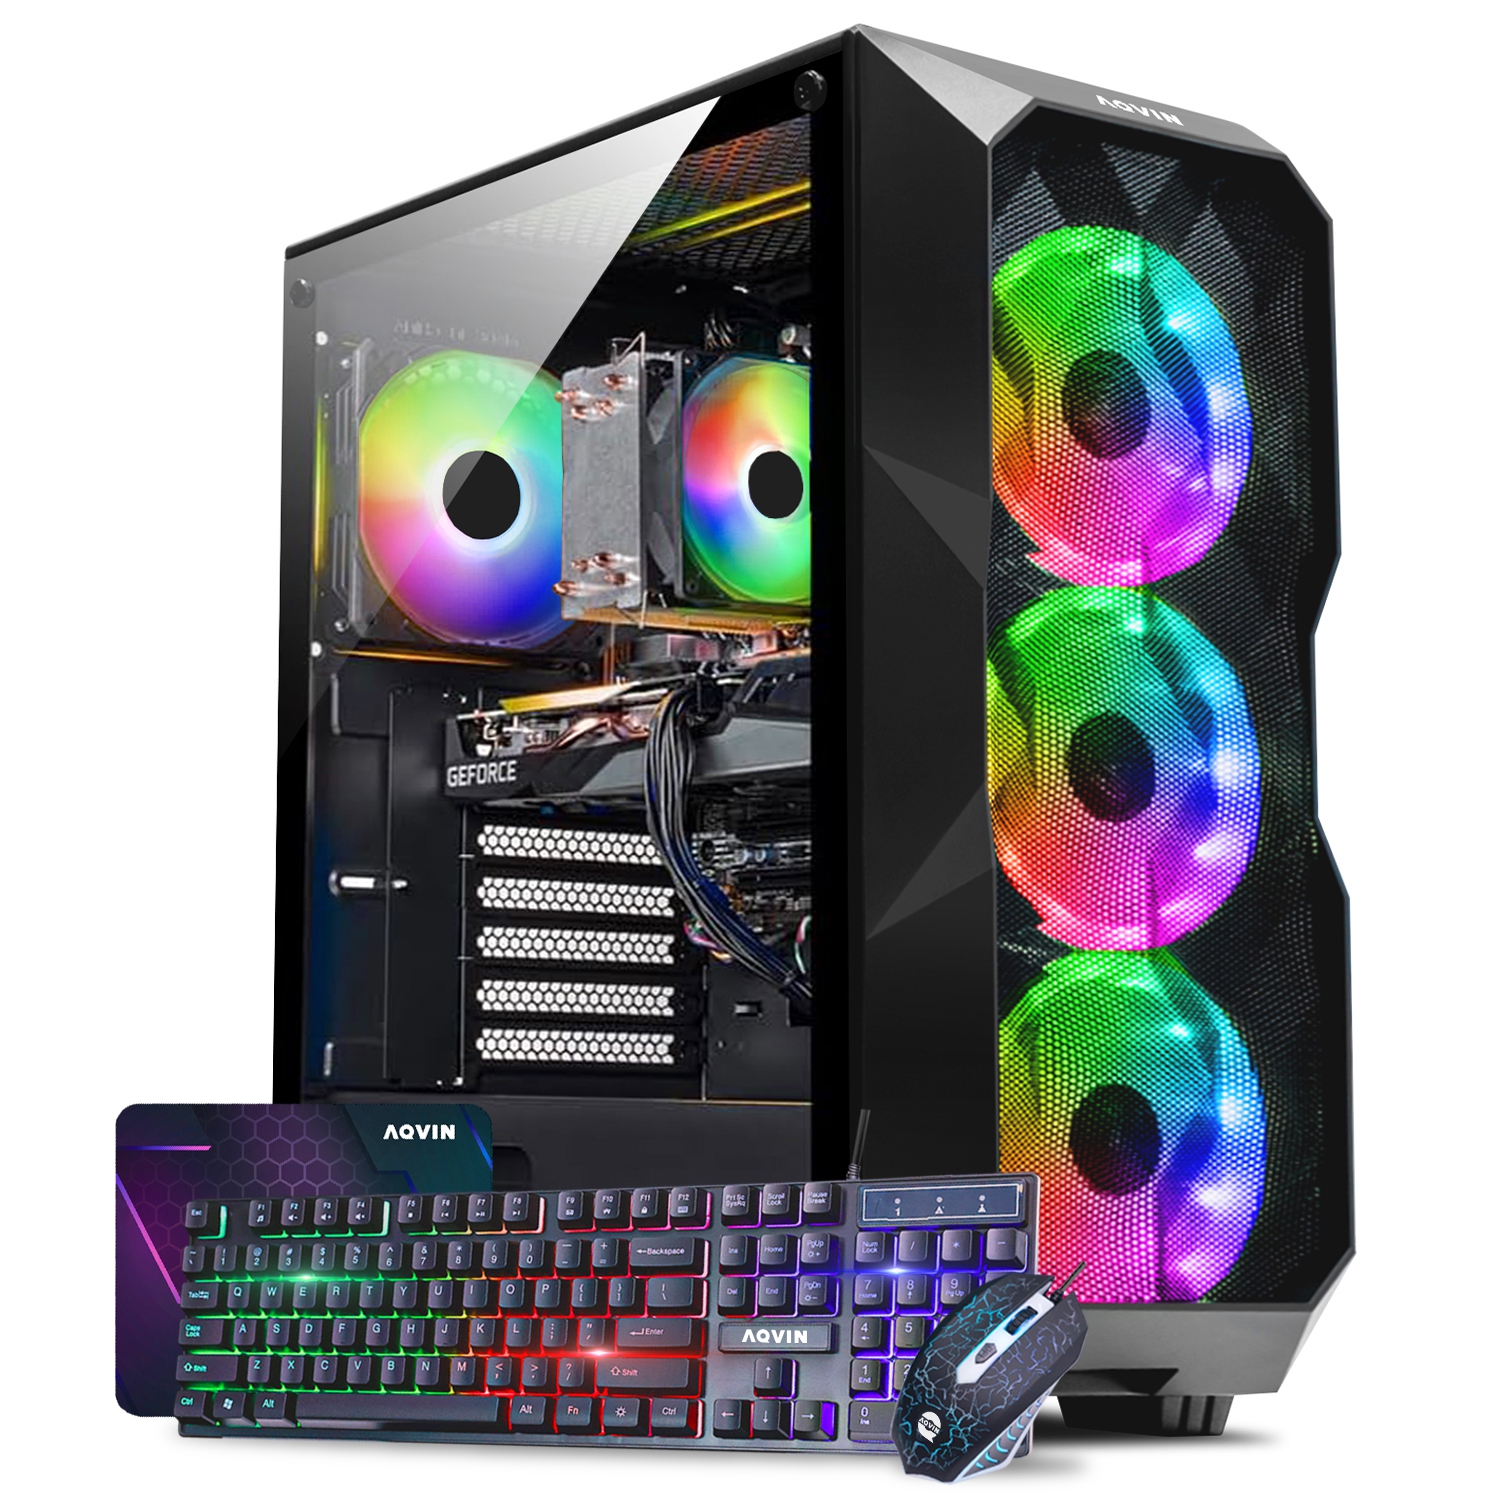 Gaming PC AQVIN AQB70 Desktop Computer Tower - RGB| Intel Core i7 CPU up to 4.00 GHz| 32GB DDR4 RAM| 2TB SSD(fast boot)| GeForce RTX 3060 12GB GPU| Windows 10 Pro -Best Buy Only